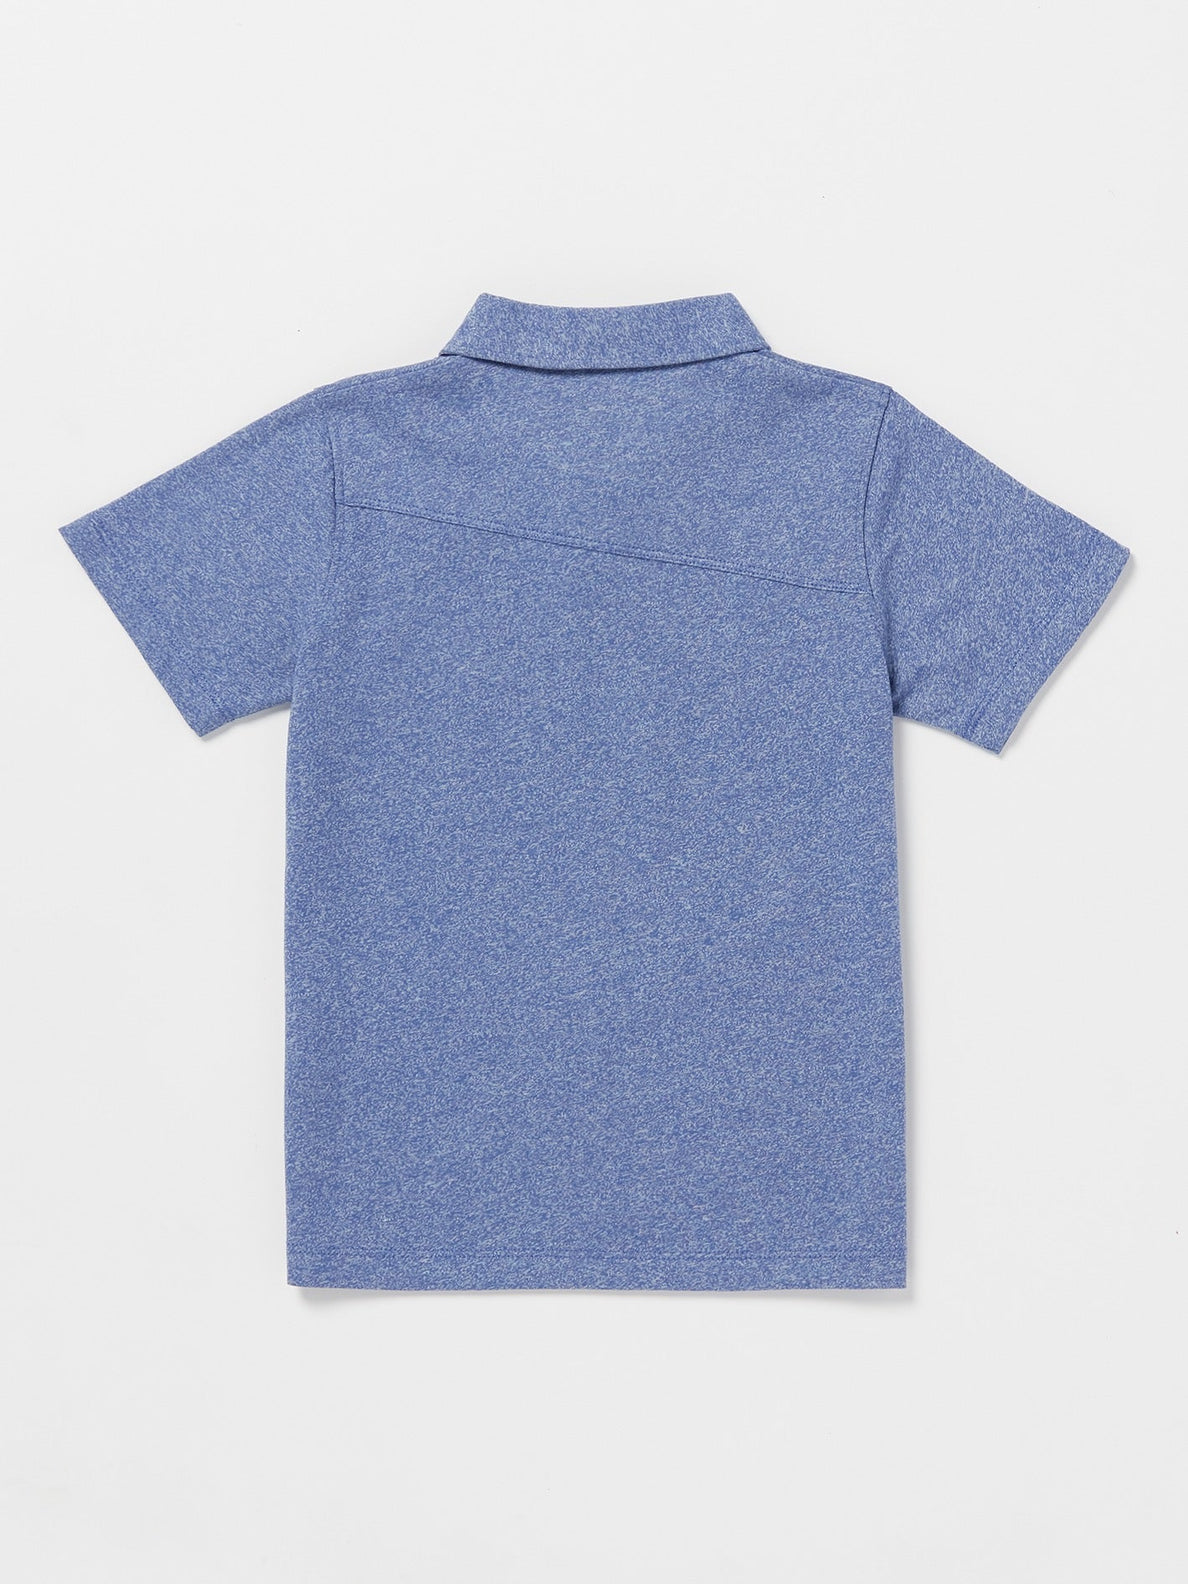 Little Boys Wowzer Polo Short Sleeve Shirt - Denim